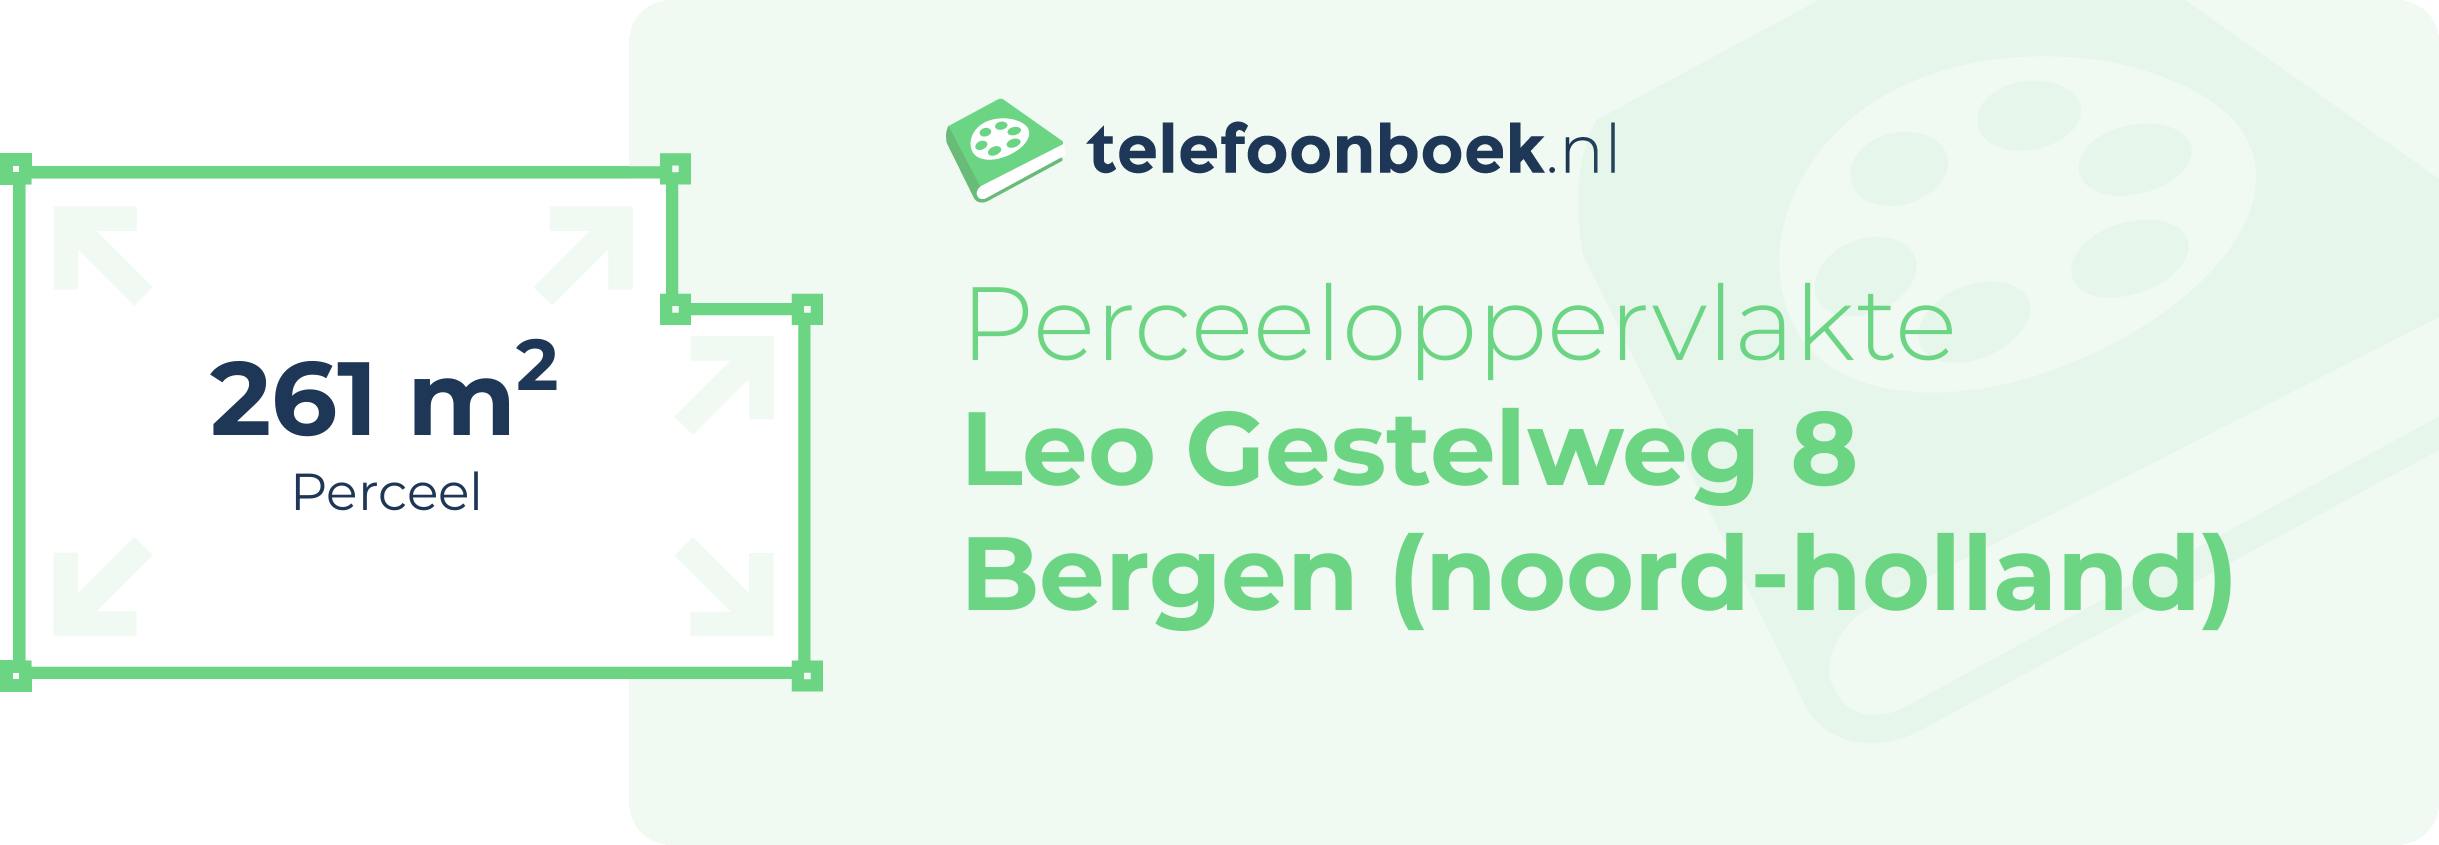 Perceeloppervlakte Leo Gestelweg 8 Bergen (Noord-Holland)